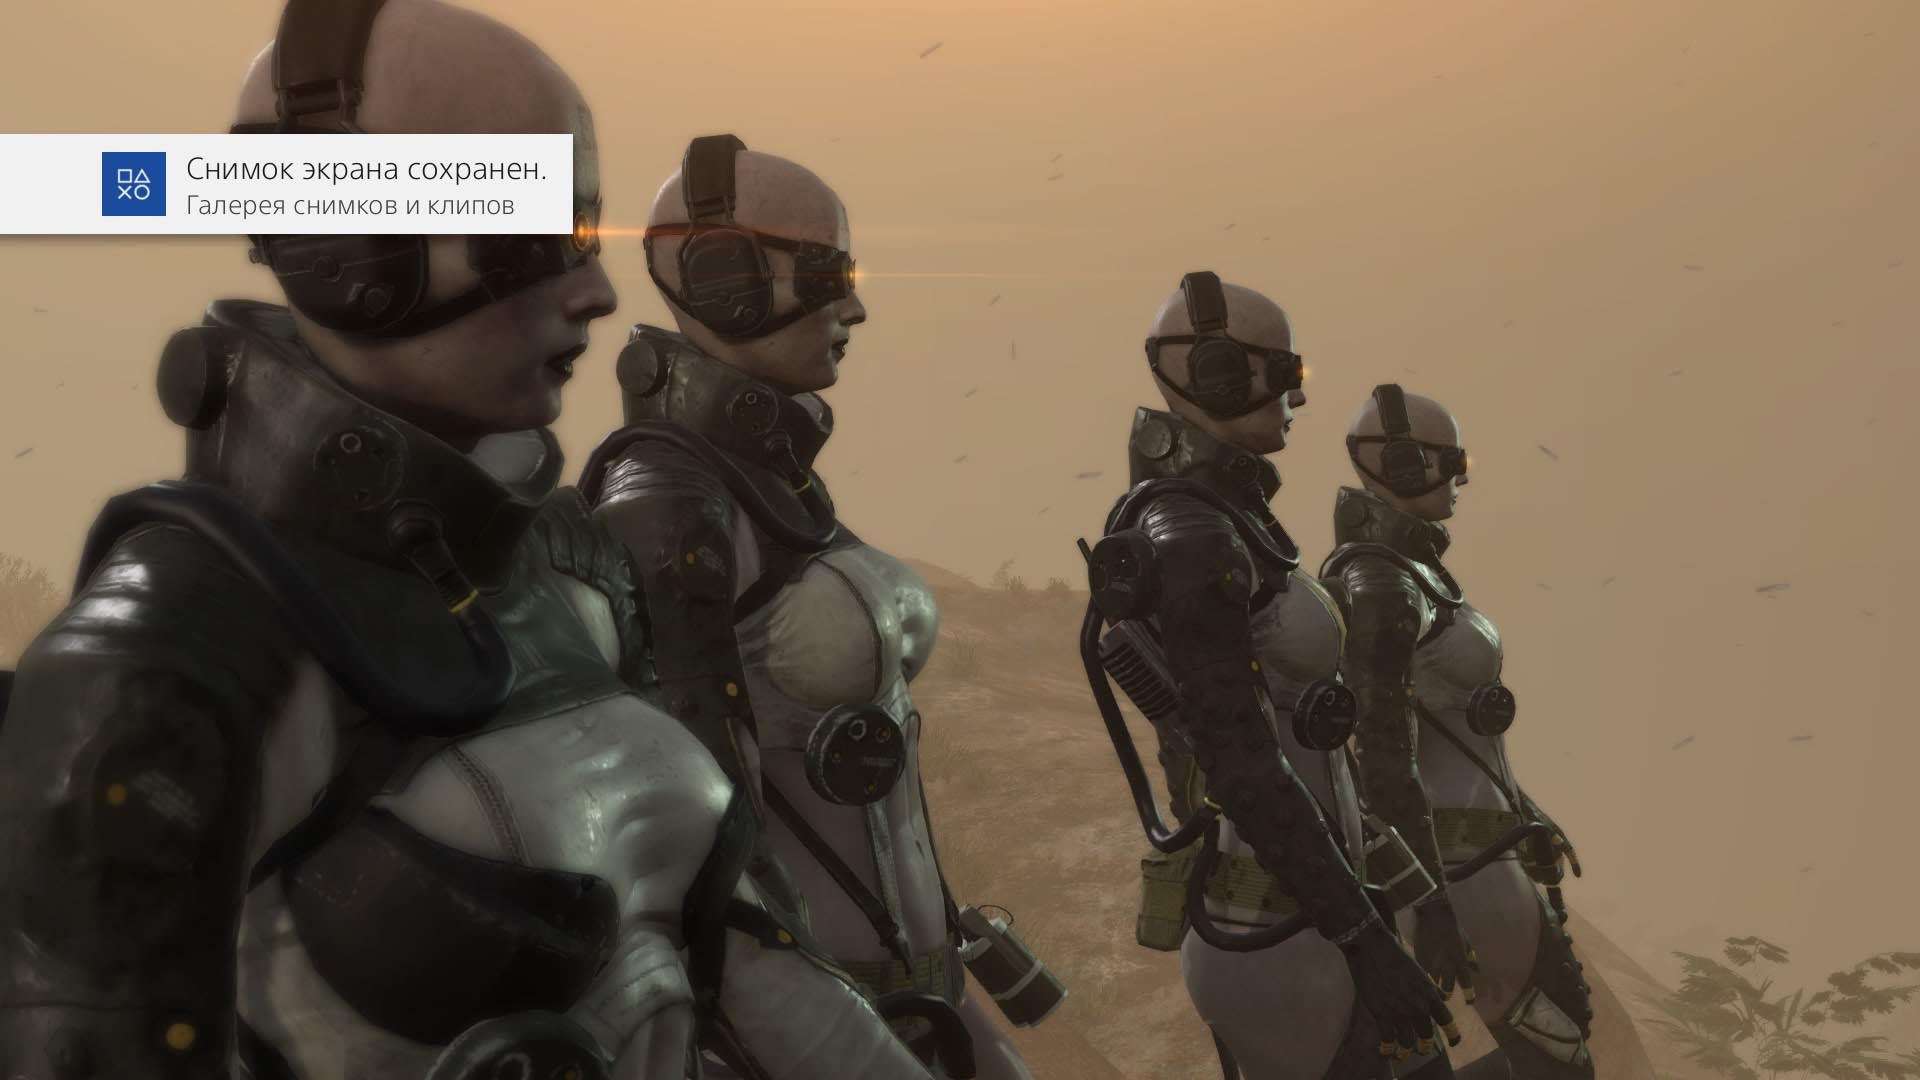 Metal Gear Solid V: The Phantom Pain Черепа эвакуированы